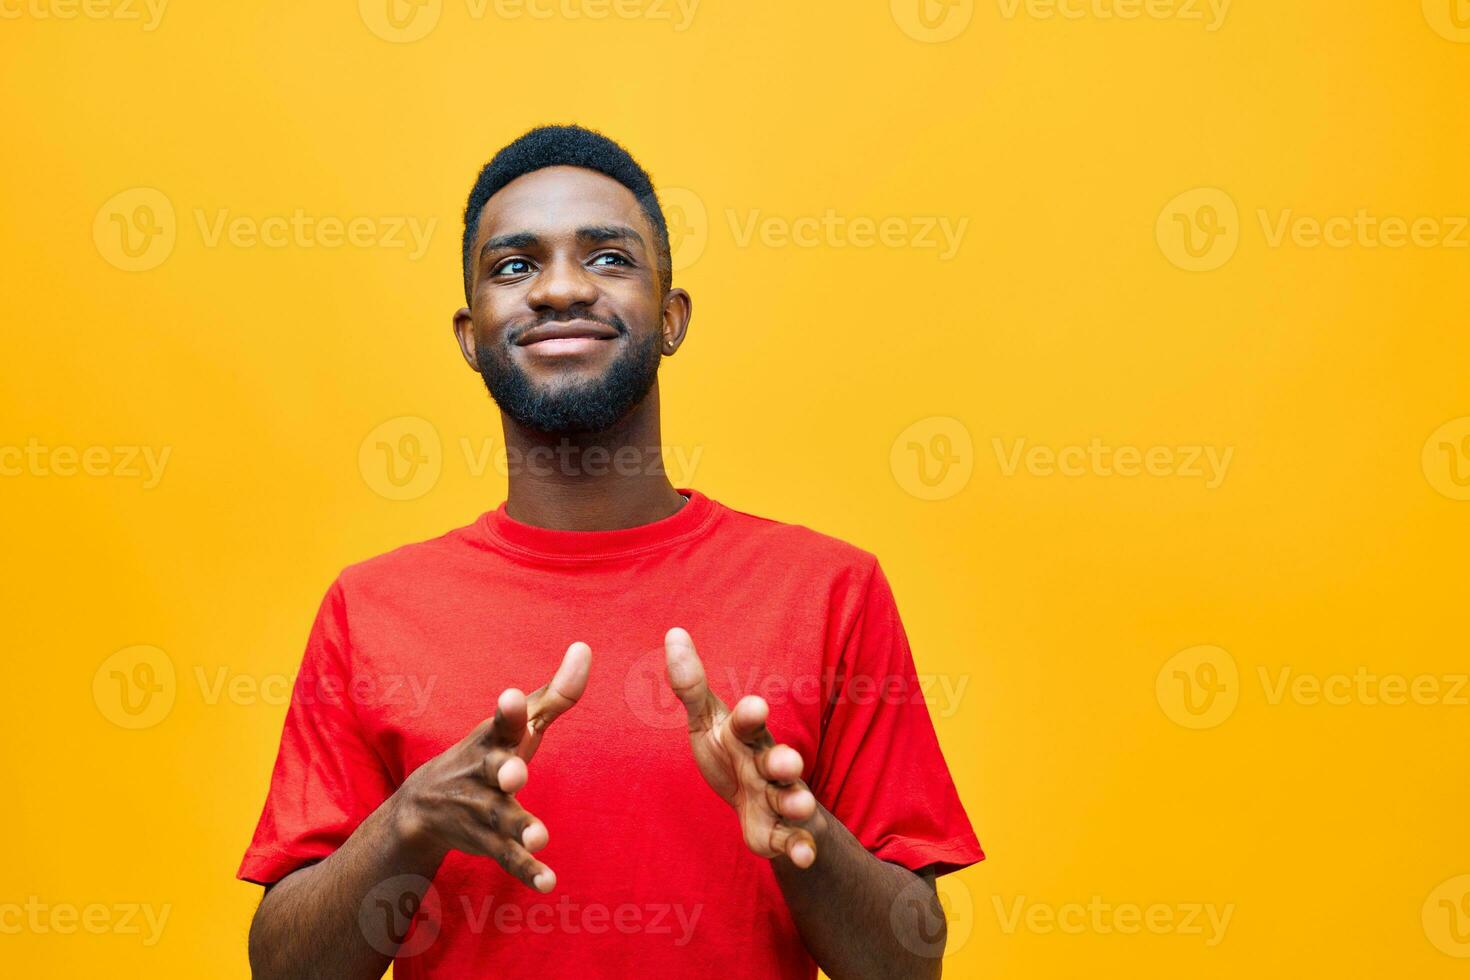 americano hombre persona posando africano americano rojo chico naranja Moda retrato negro antecedentes foto